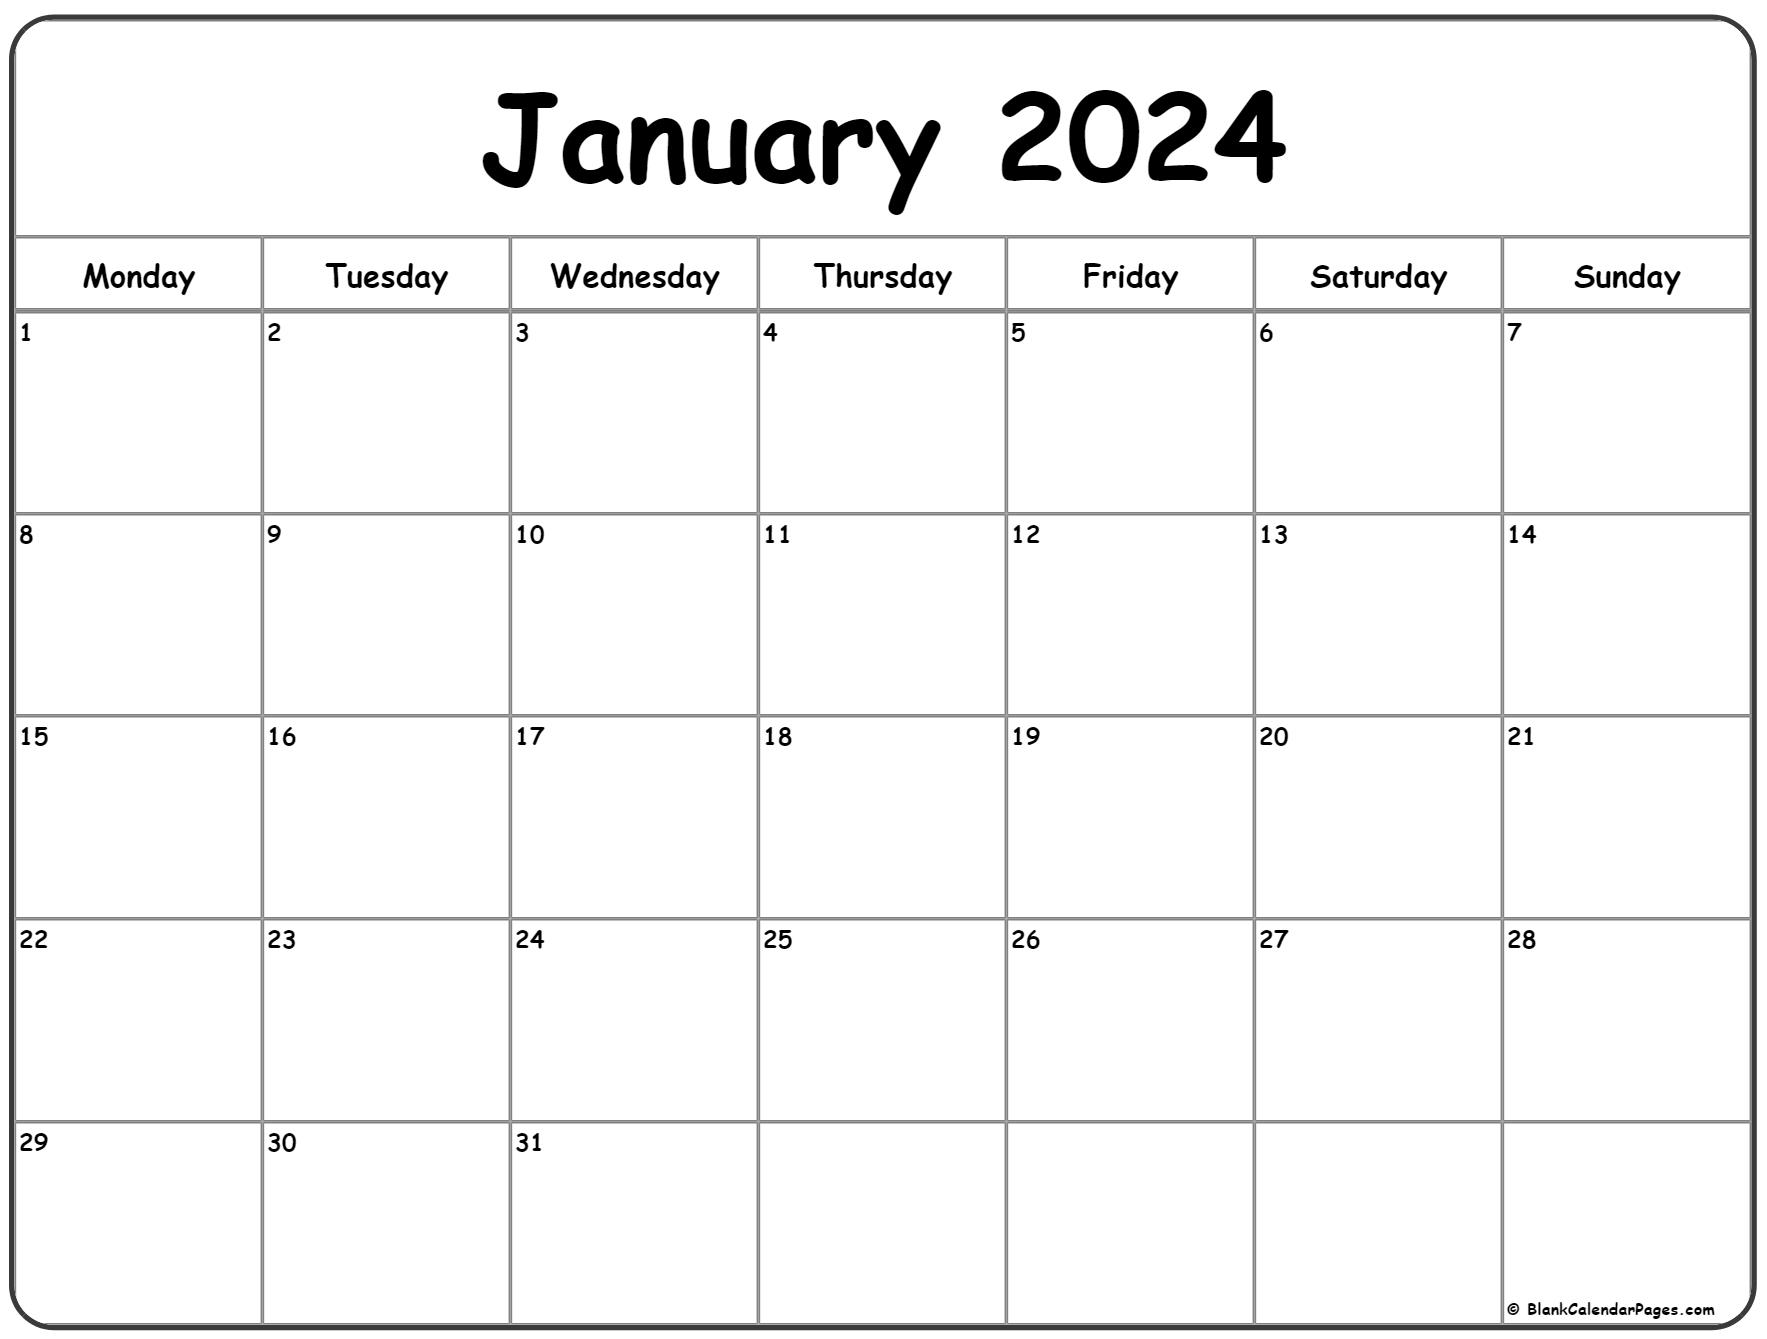 Monday Start Calendar 2022 January 2022 Monday Calendar | Monday To Sunday